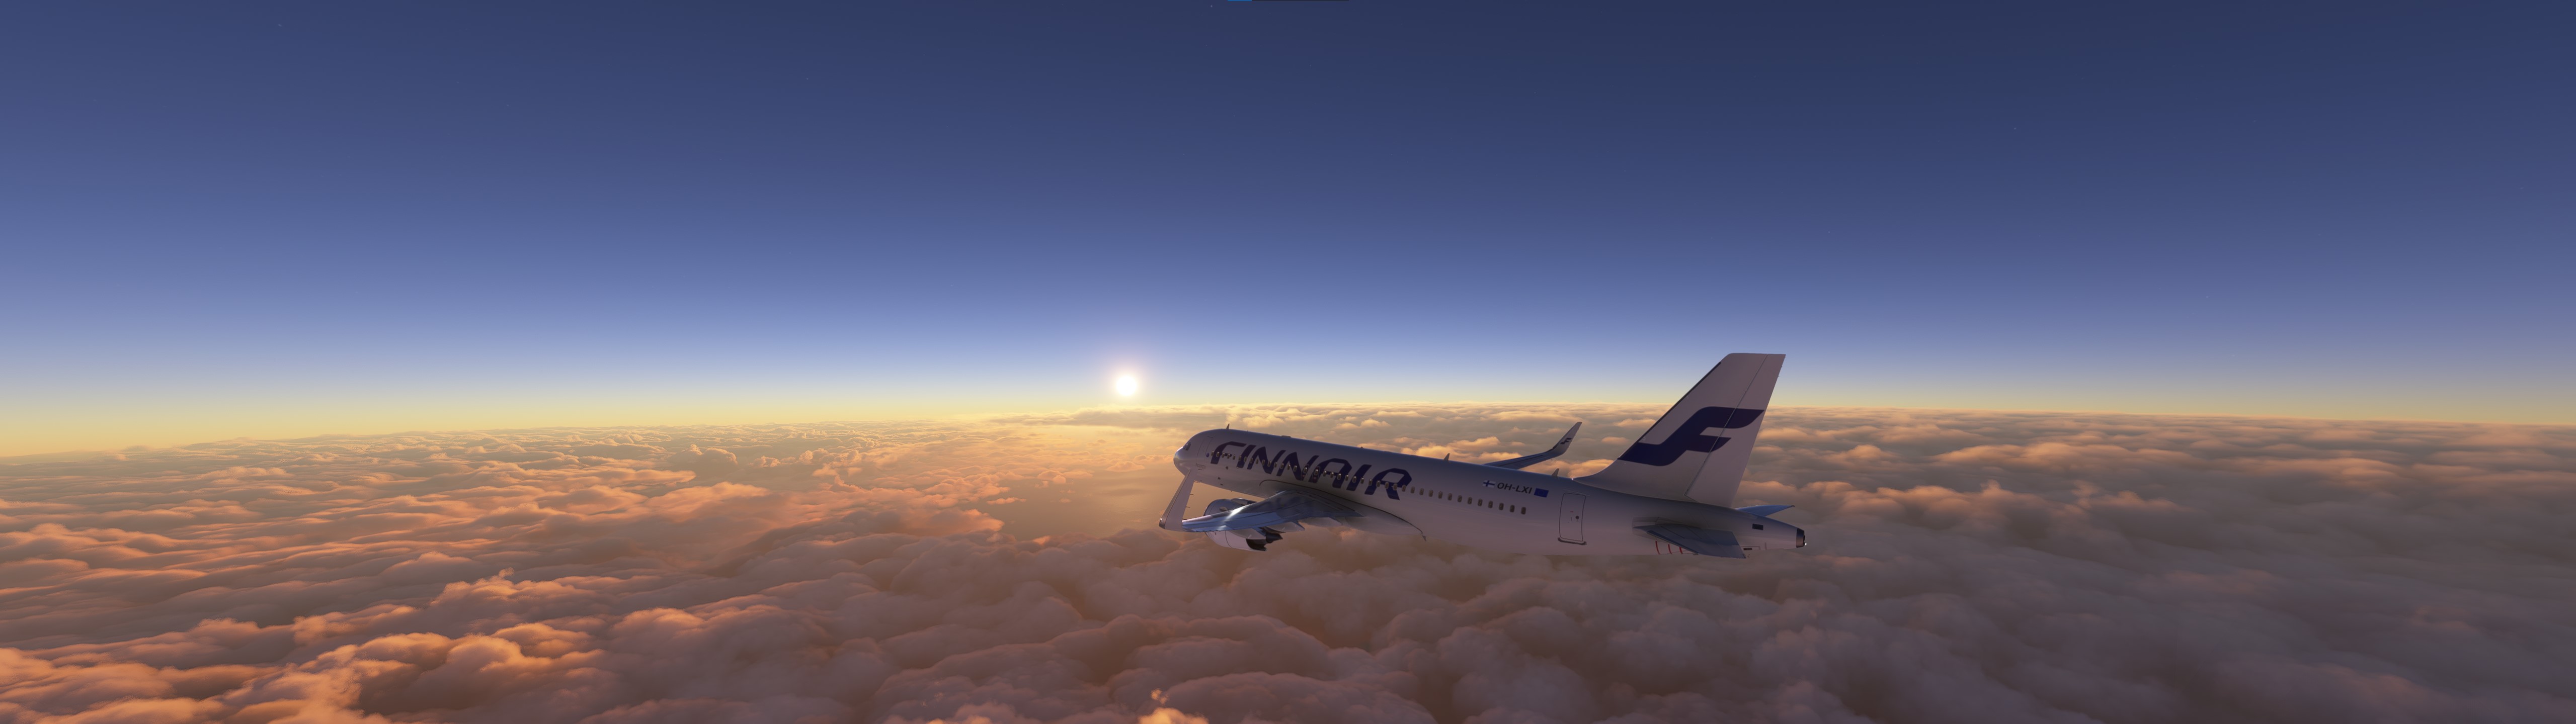 General 5120x1440 flight simulator flying sky clouds Airbus A320 Finnair PC gaming screen shot passenger aircraft aircraft vehicle